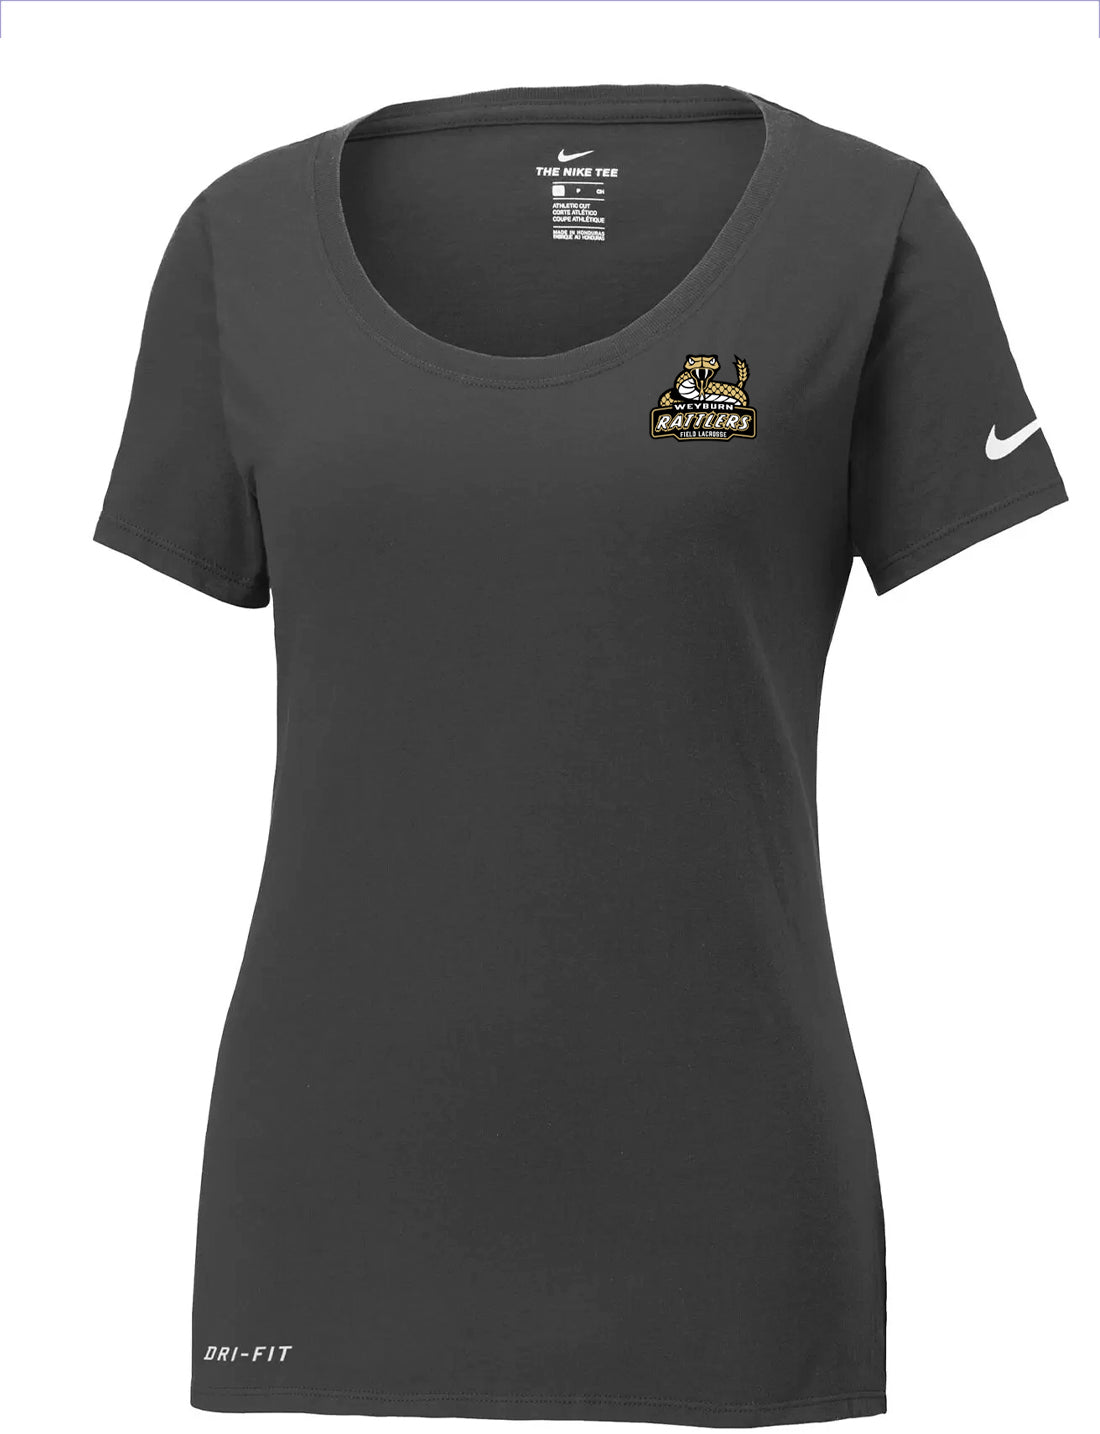 Weyburn Rattlers & Thrashers Coaches T-Shirt